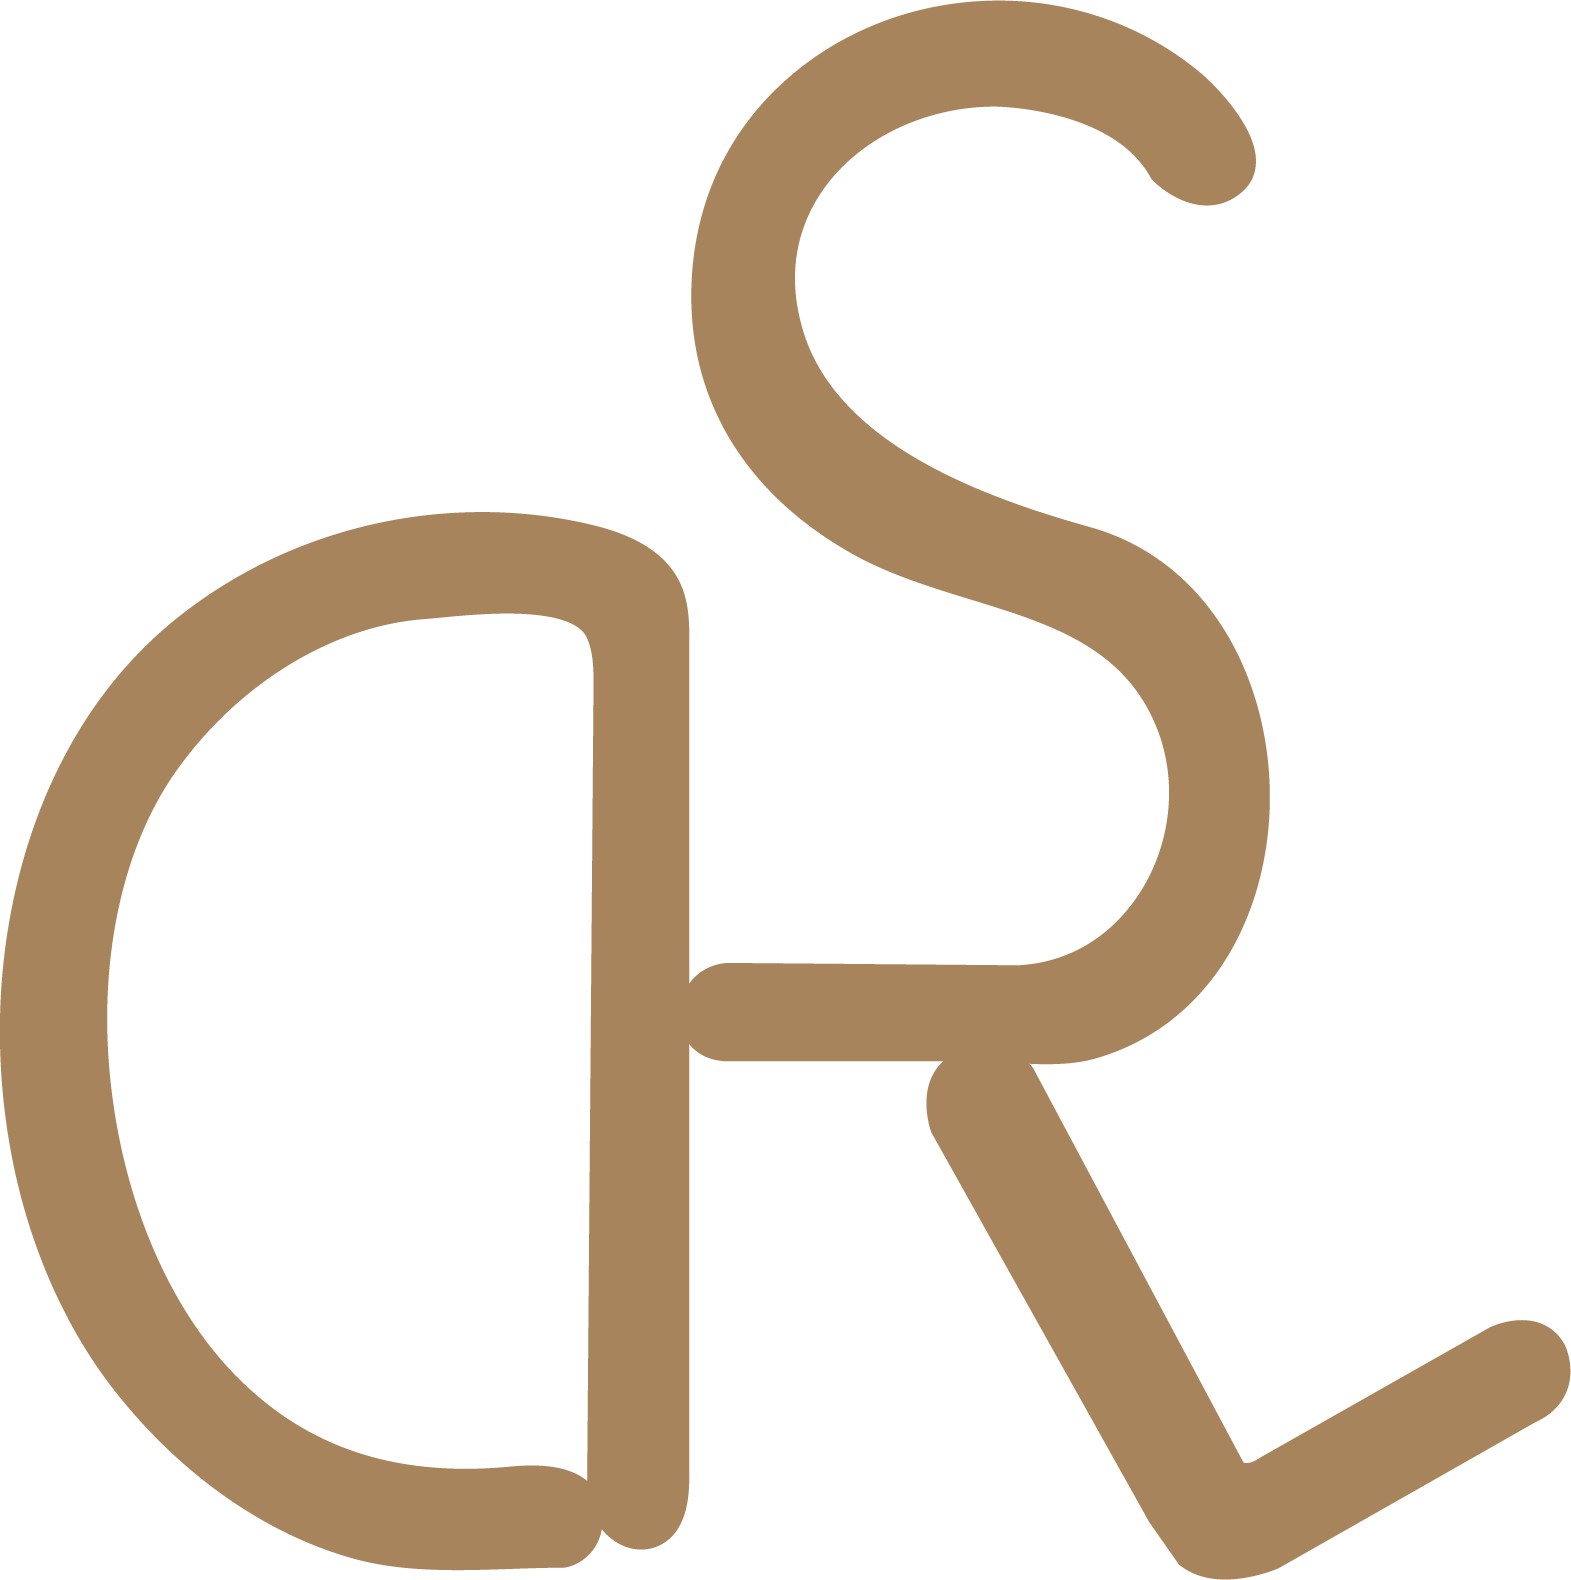 Roberts Longhorns logo